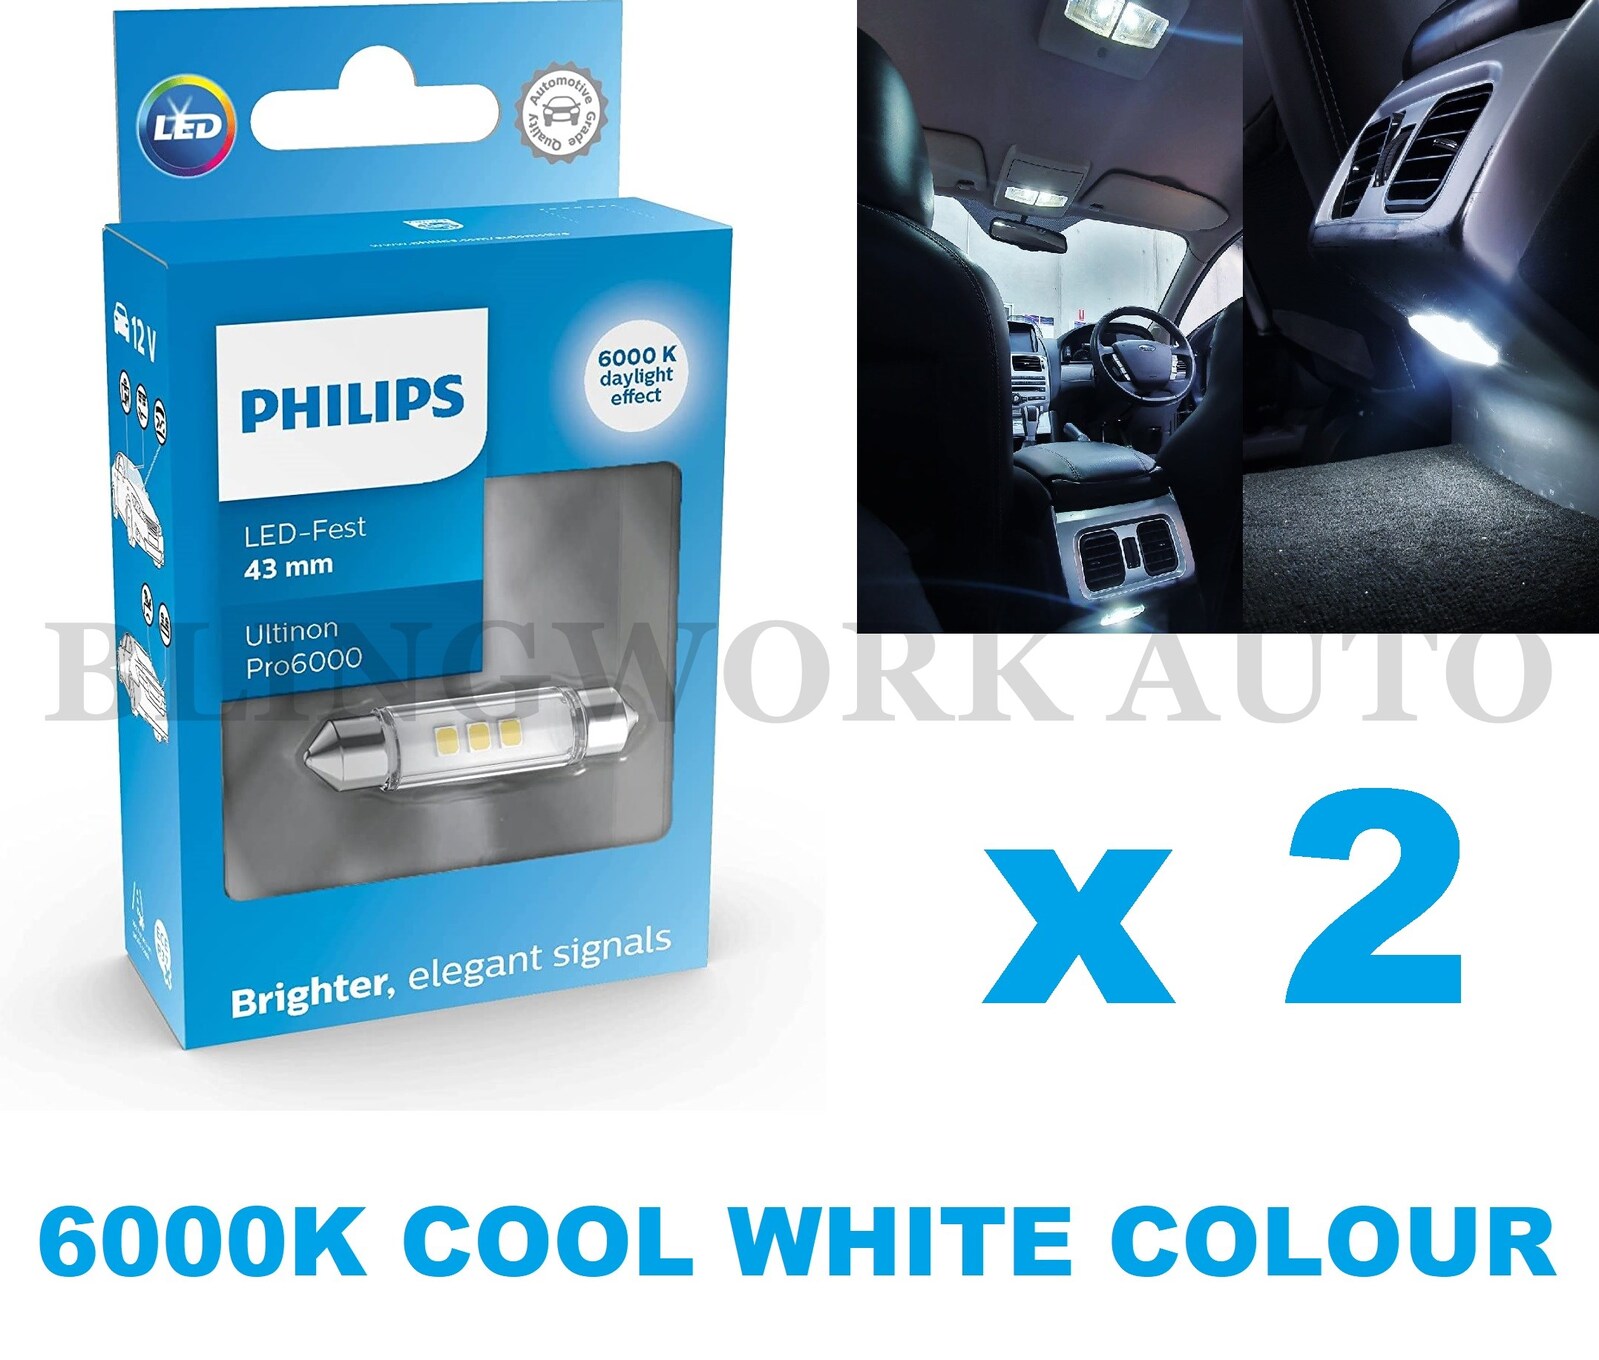 PHILIPS 43mm Ultinon Pro6000 LED 6000K Cool White Interior Festoon Bulbs